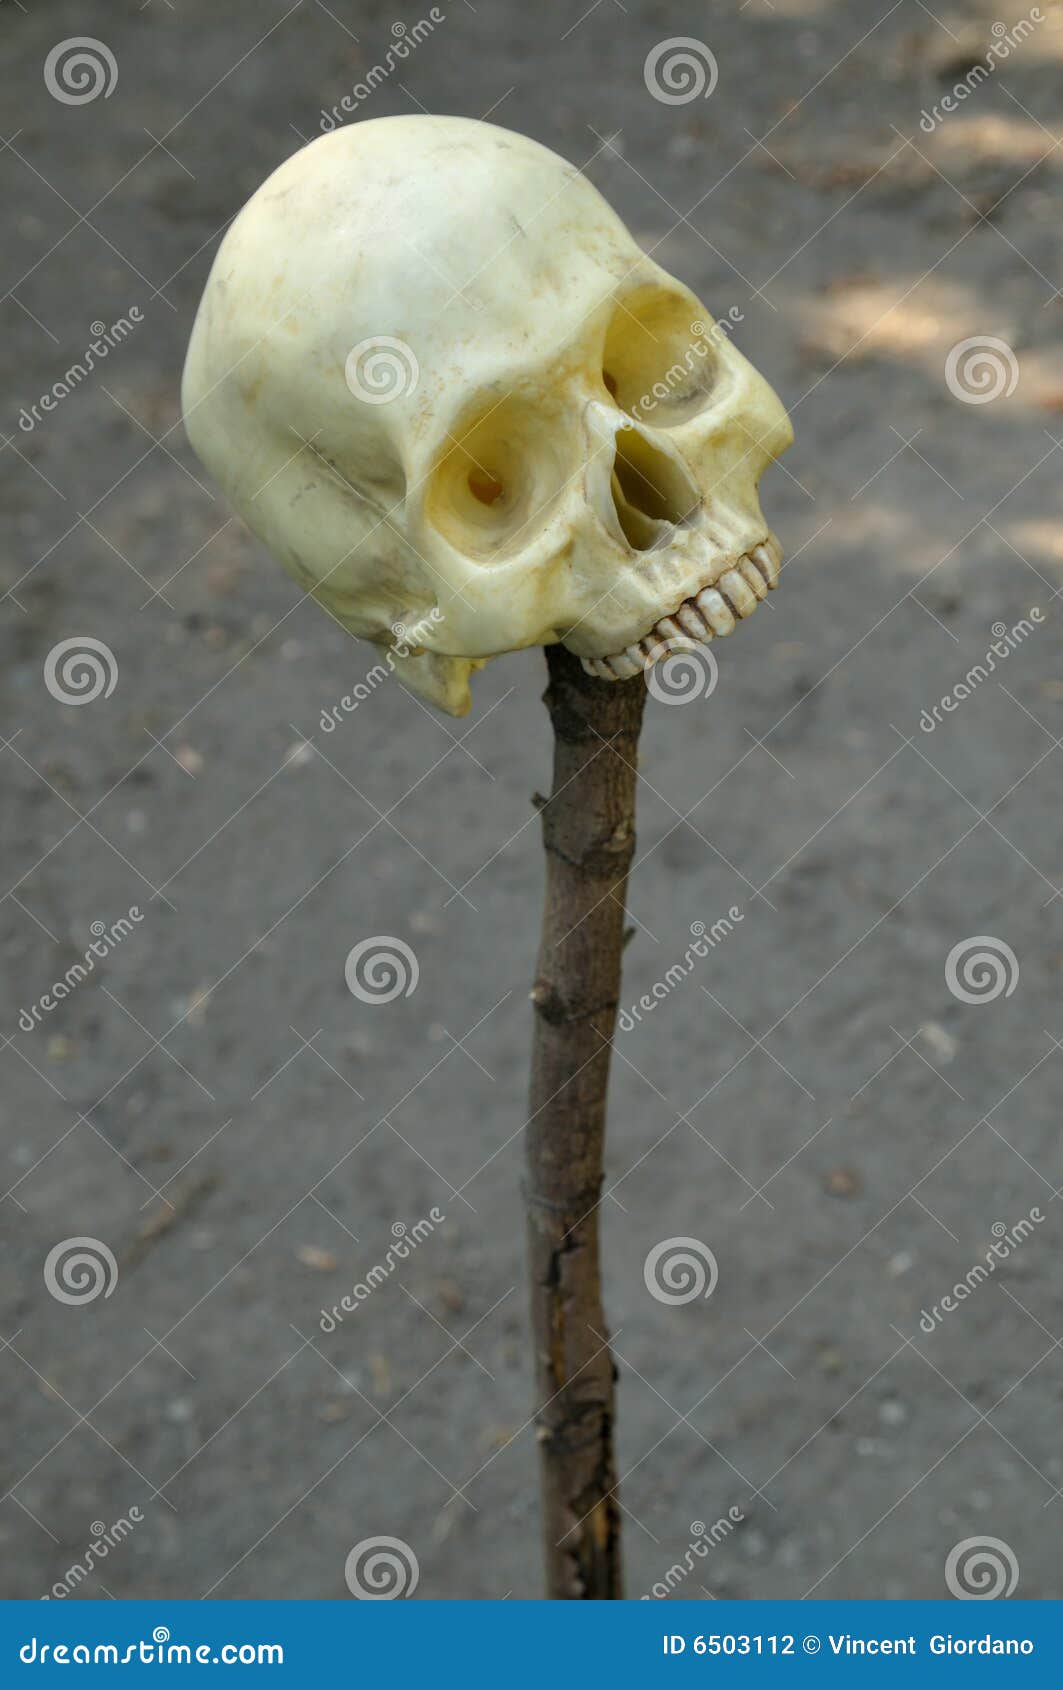 Human skull on stick stock photo. Image of physiology - 6503112